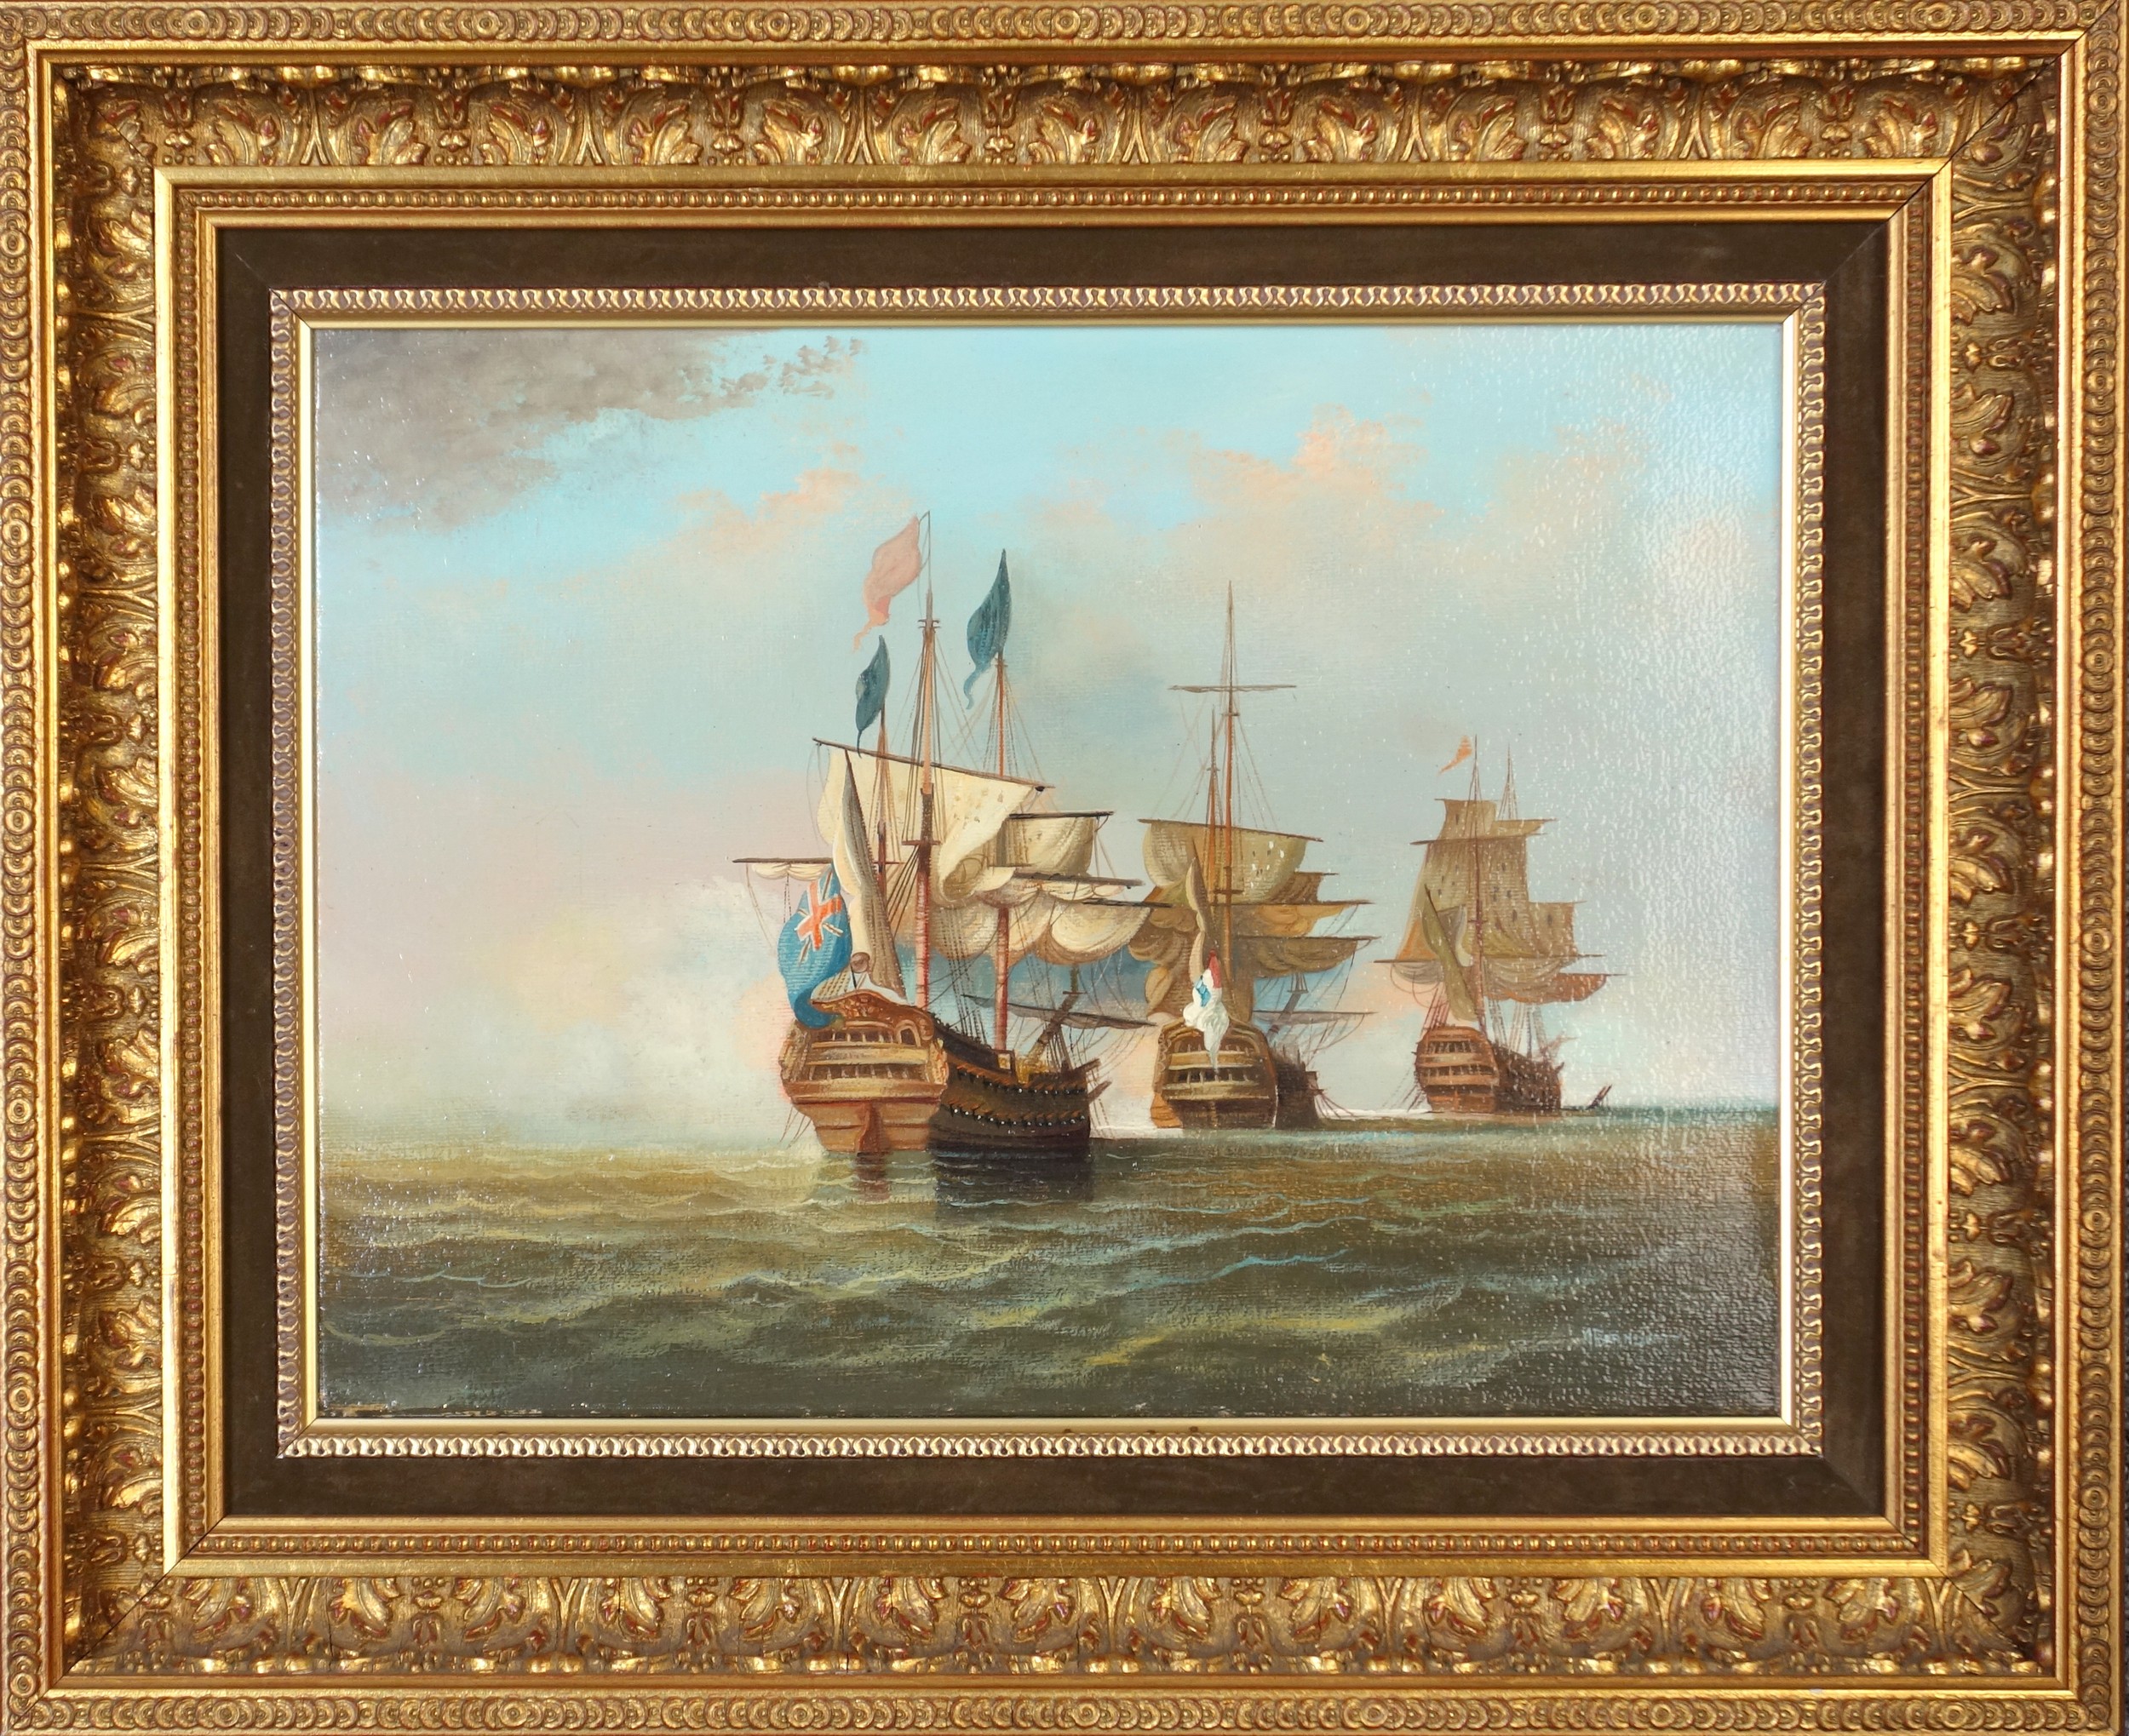 M Branduftt (20th Century), three Napoleonic gunships on the high seas, oil on canvas, signed